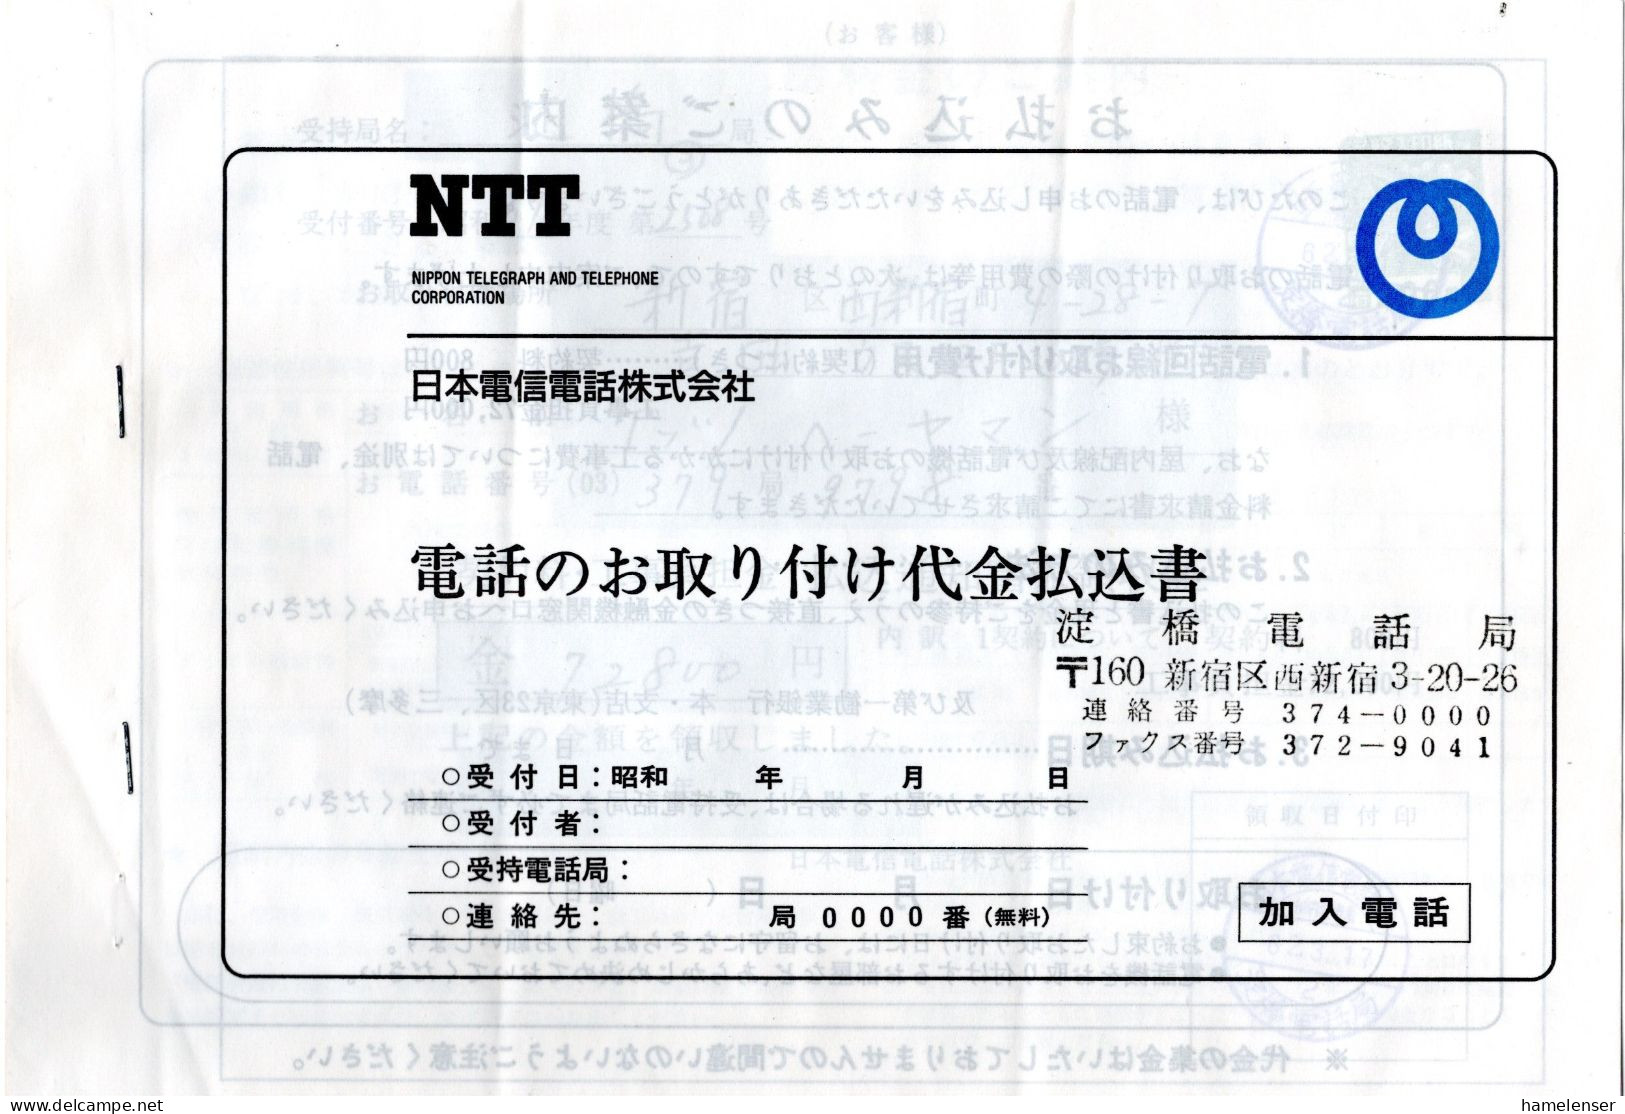 L65575 - Japan - 1987 - ¥200 Stempelmarke EF A Fernmeldevertragsgrundgebuehrquittung, NTT-Filiale Yodobashi, Tokyo - Timbri Generalità